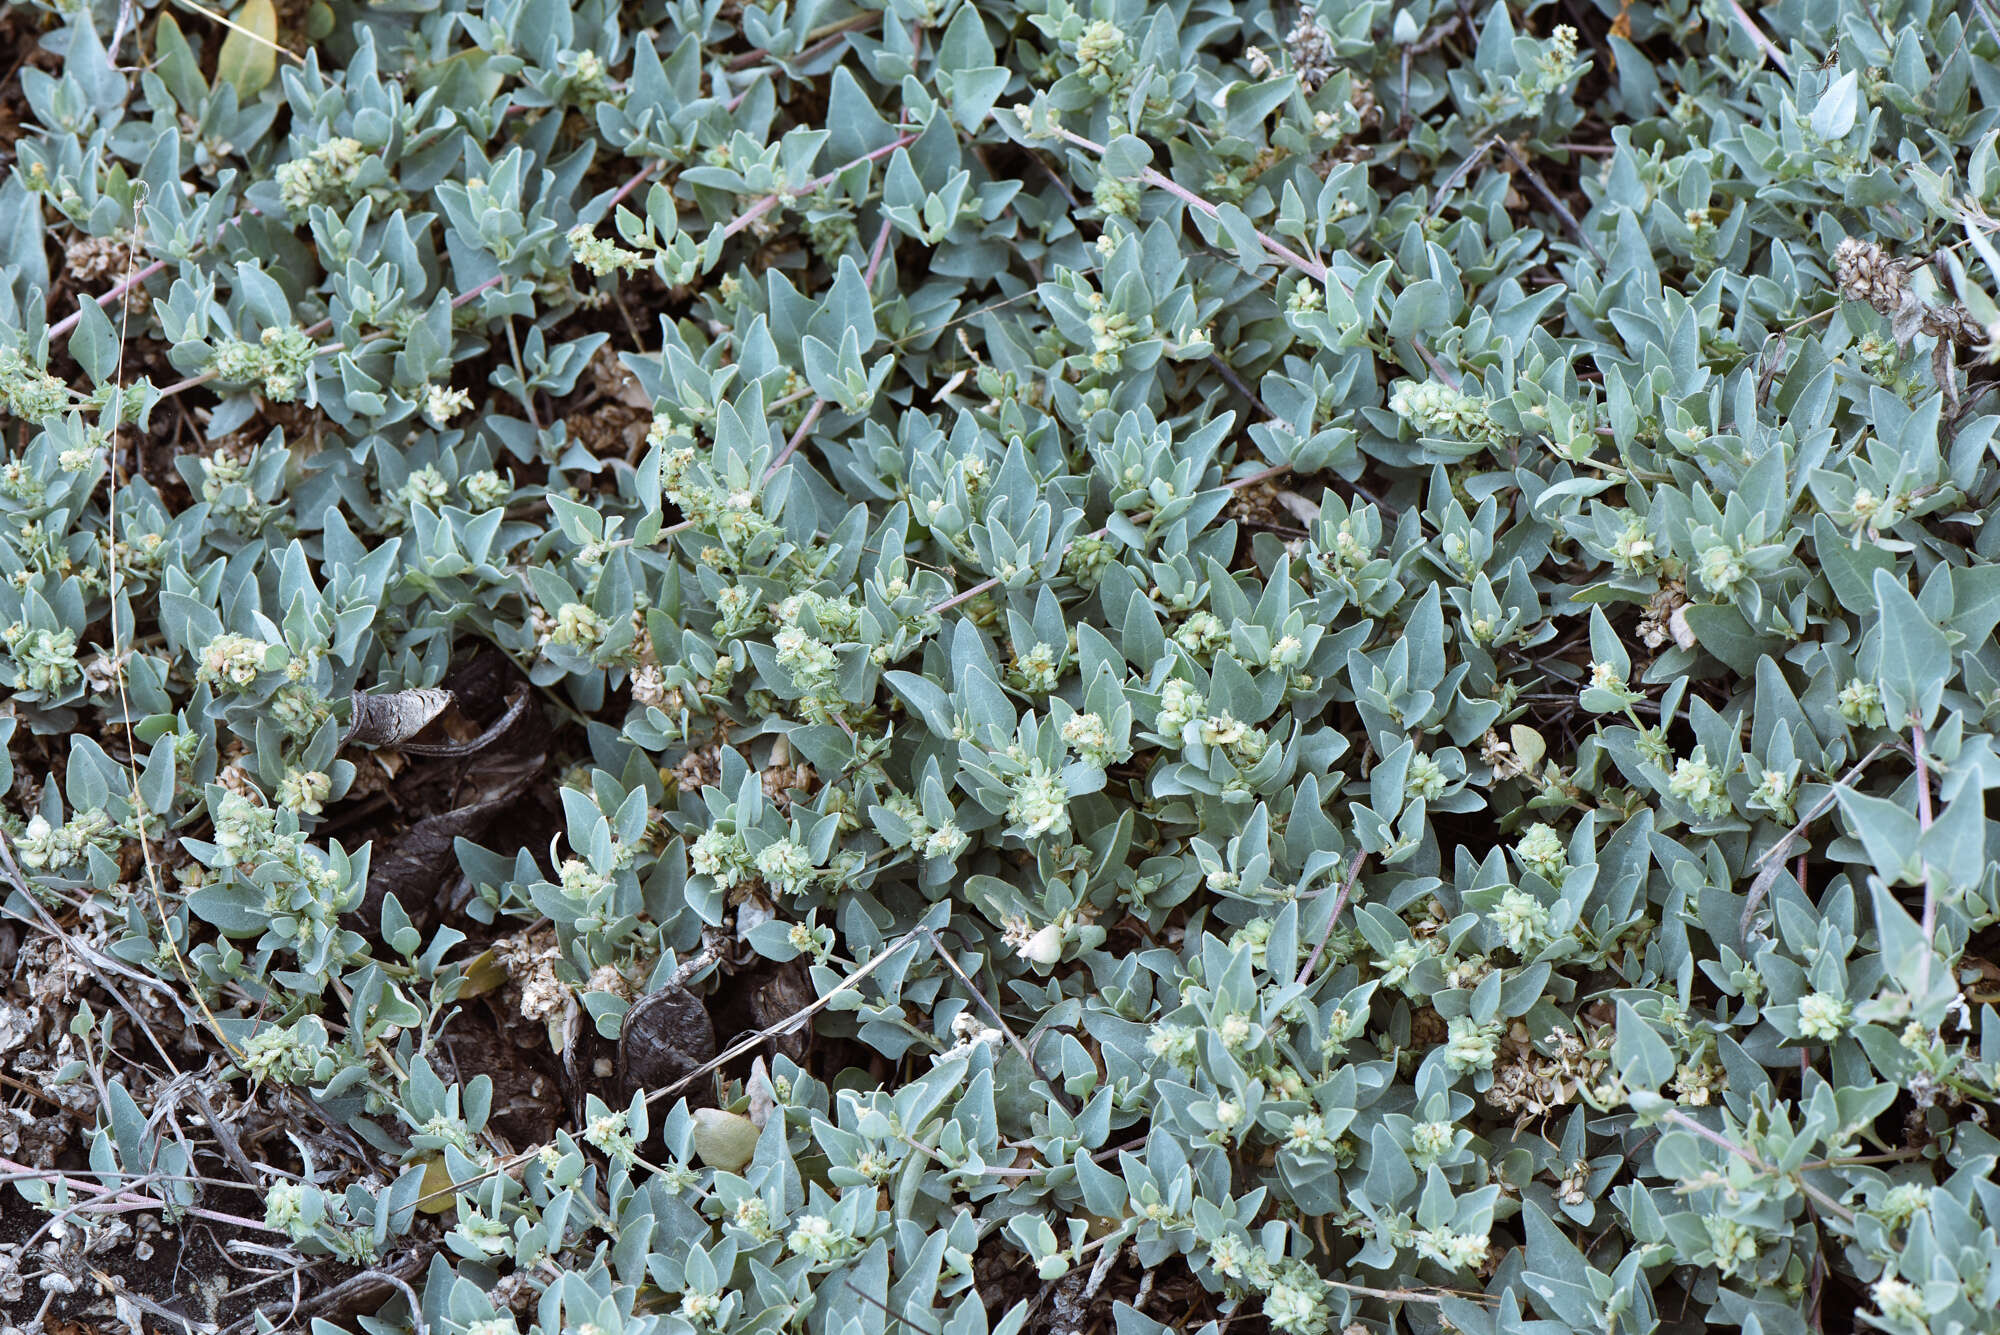 Image of Maximowicz's saltbush